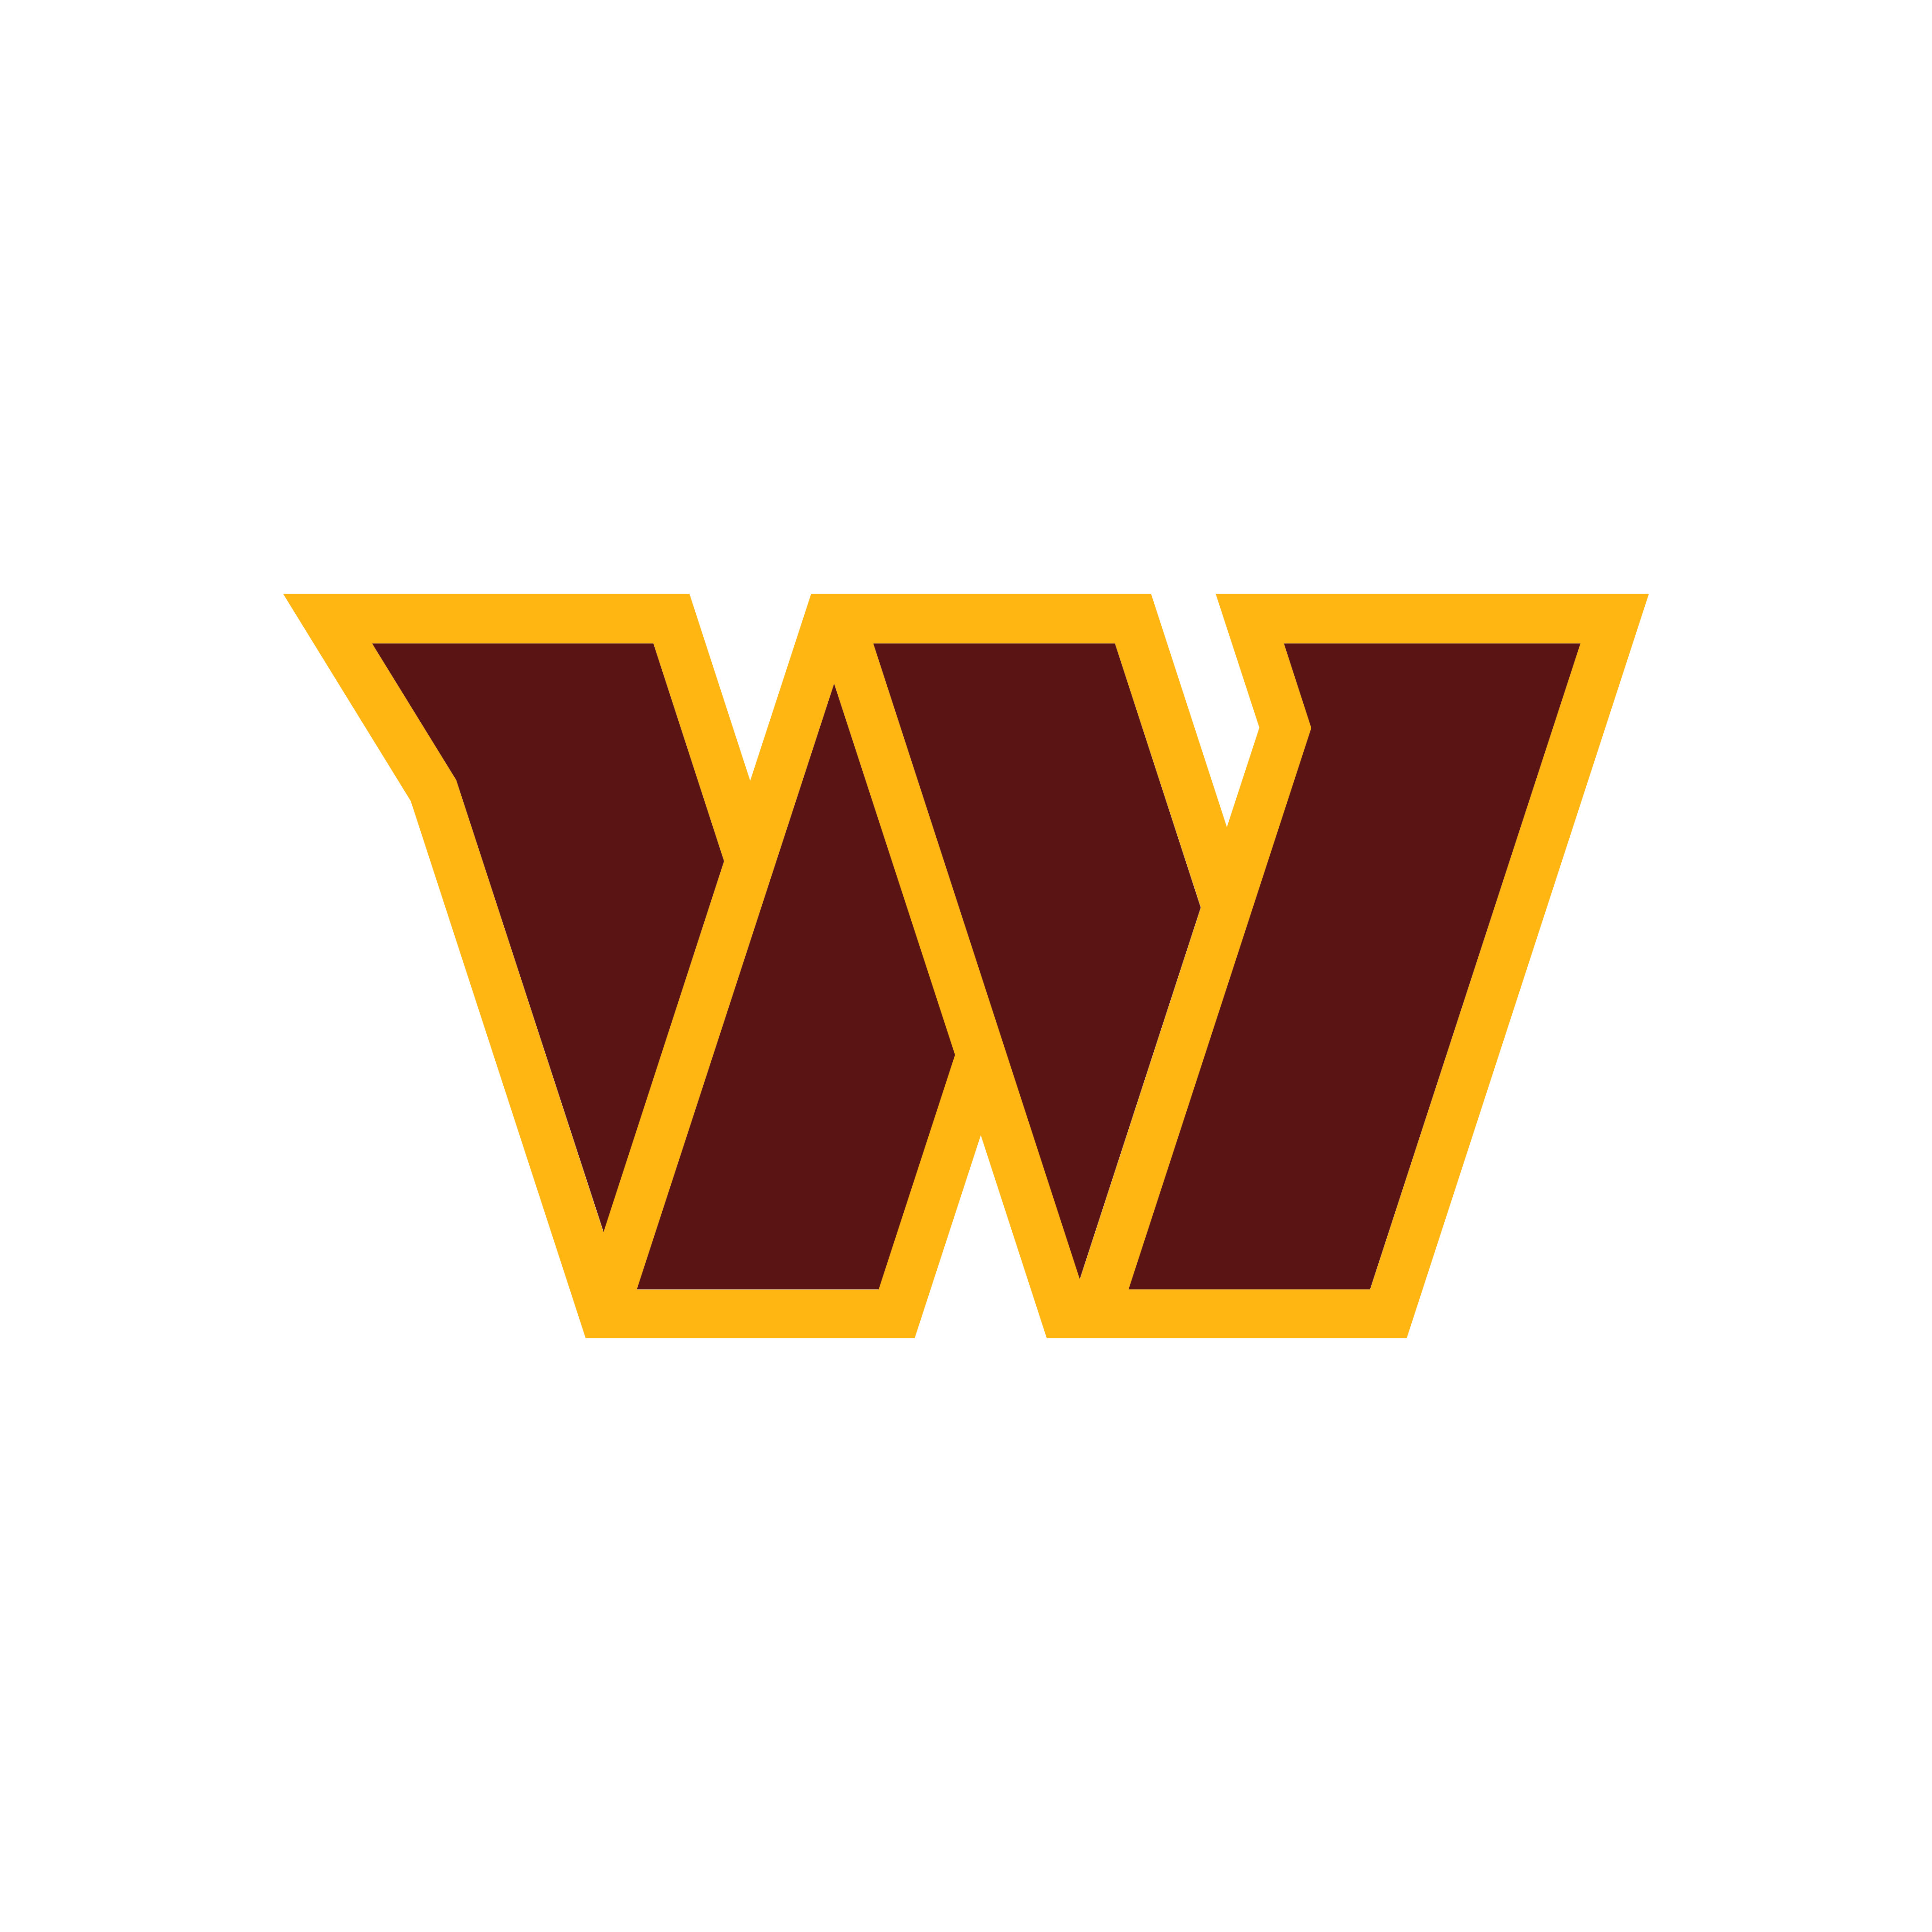 washington commanders logo 0 - Washington Commanders Logo